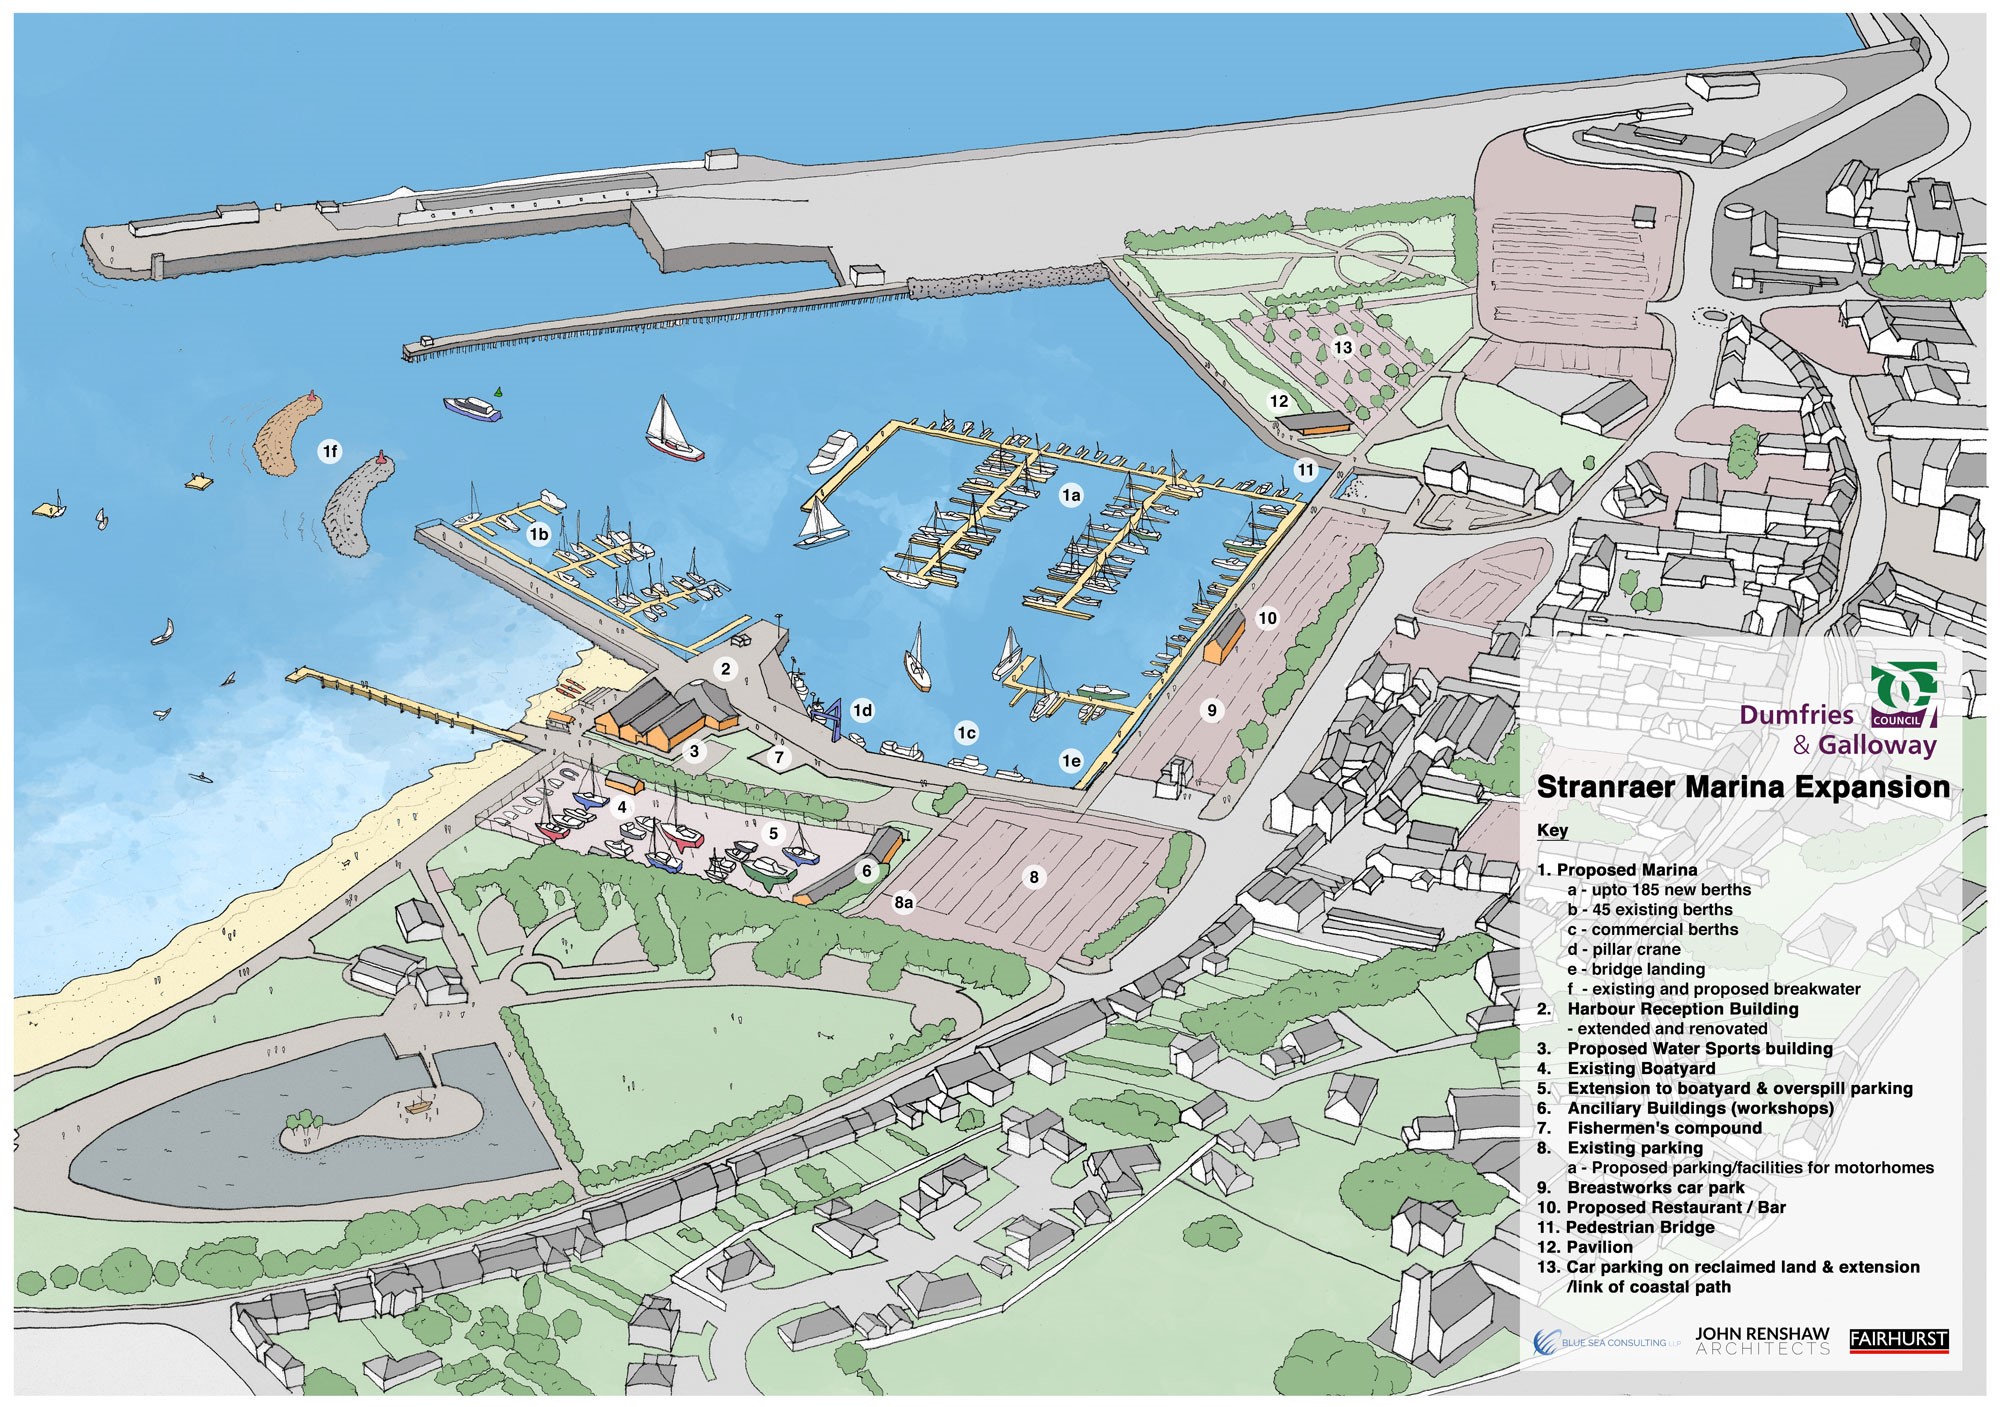 Stranraer Marina Expansion